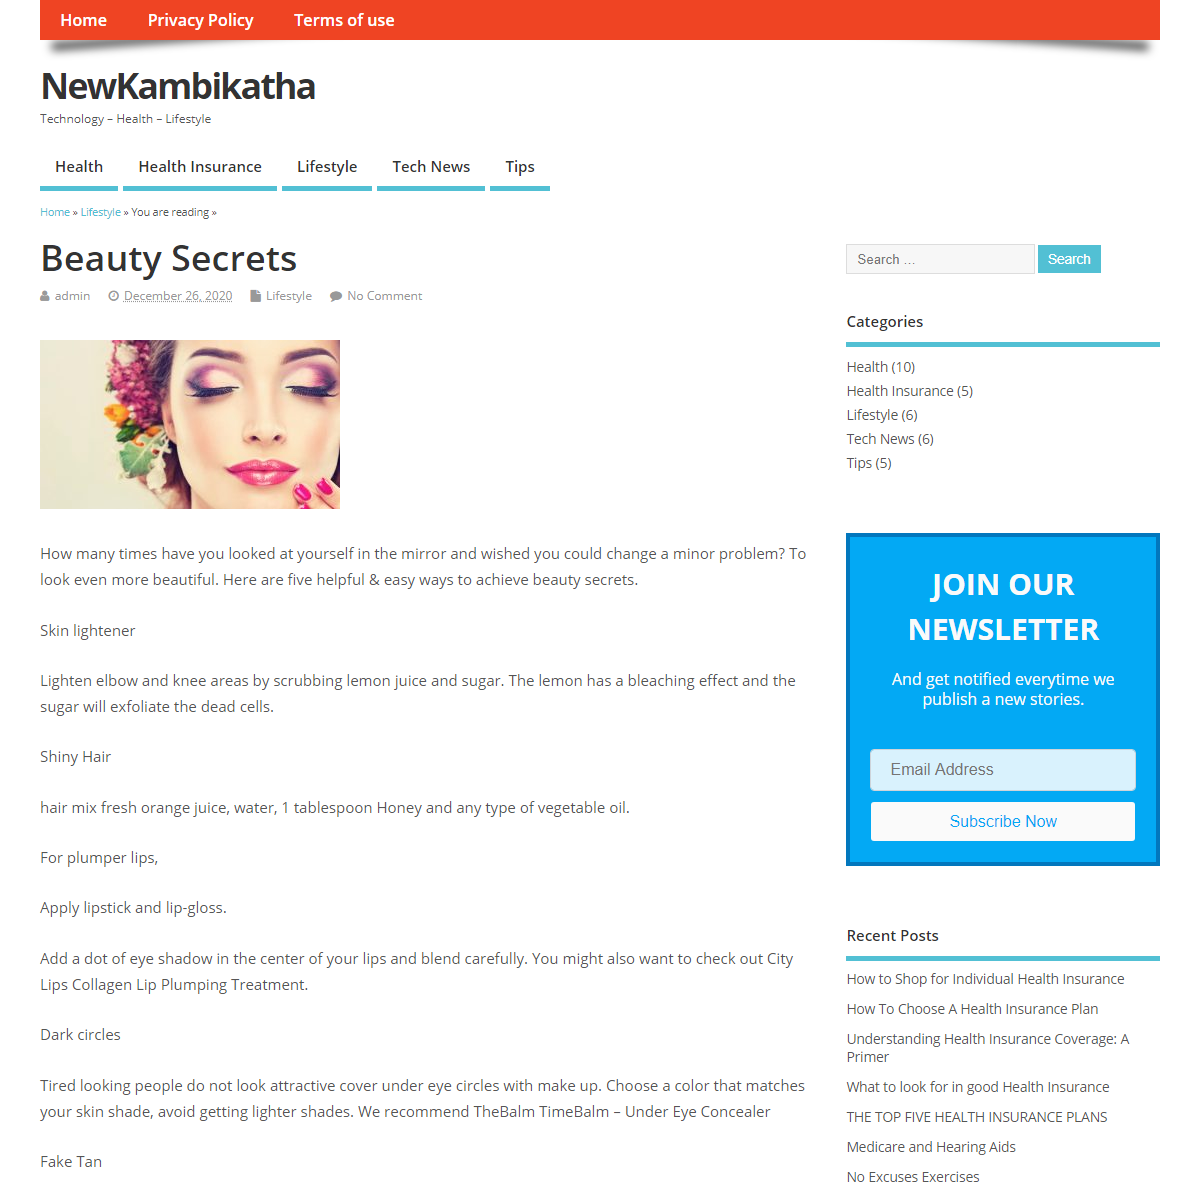 A complete backup of https://www.newkambikatha.com/2020/12/26/beauty-secrets/